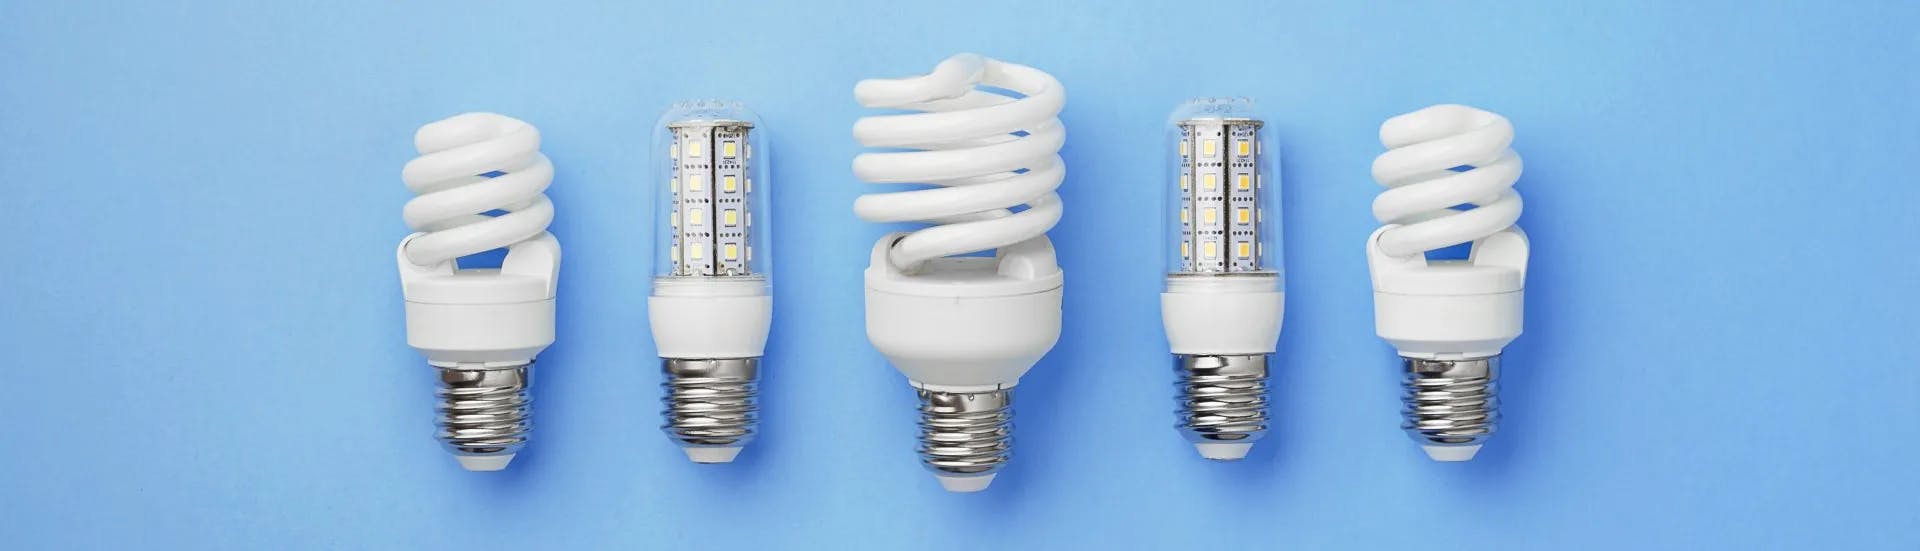 Different lightbulbs on a light blue background